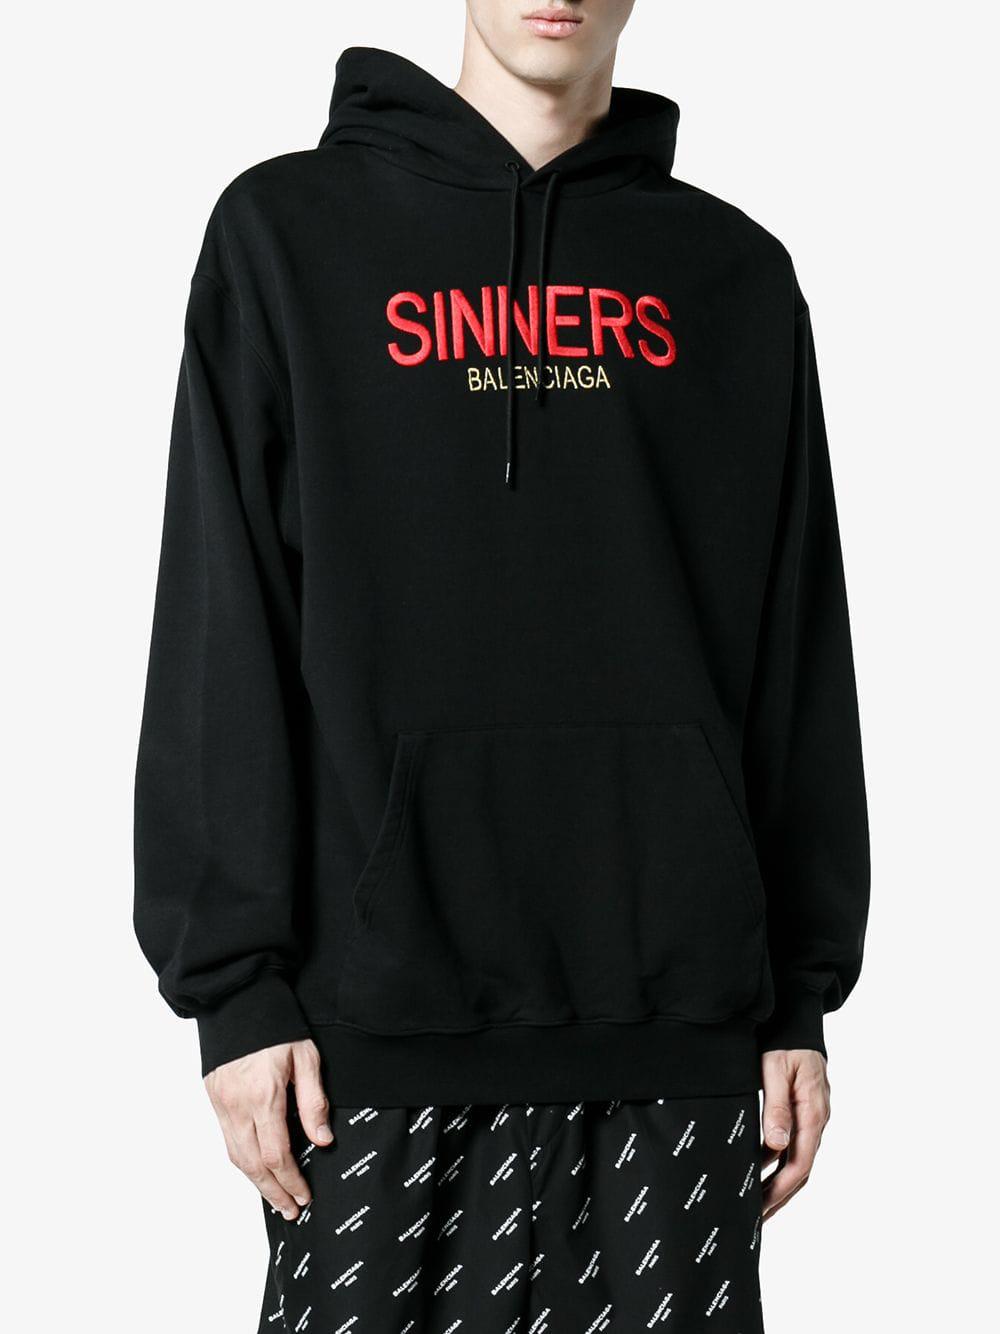 Balenciaga Sinners Hoodie in Black for Men | Lyst